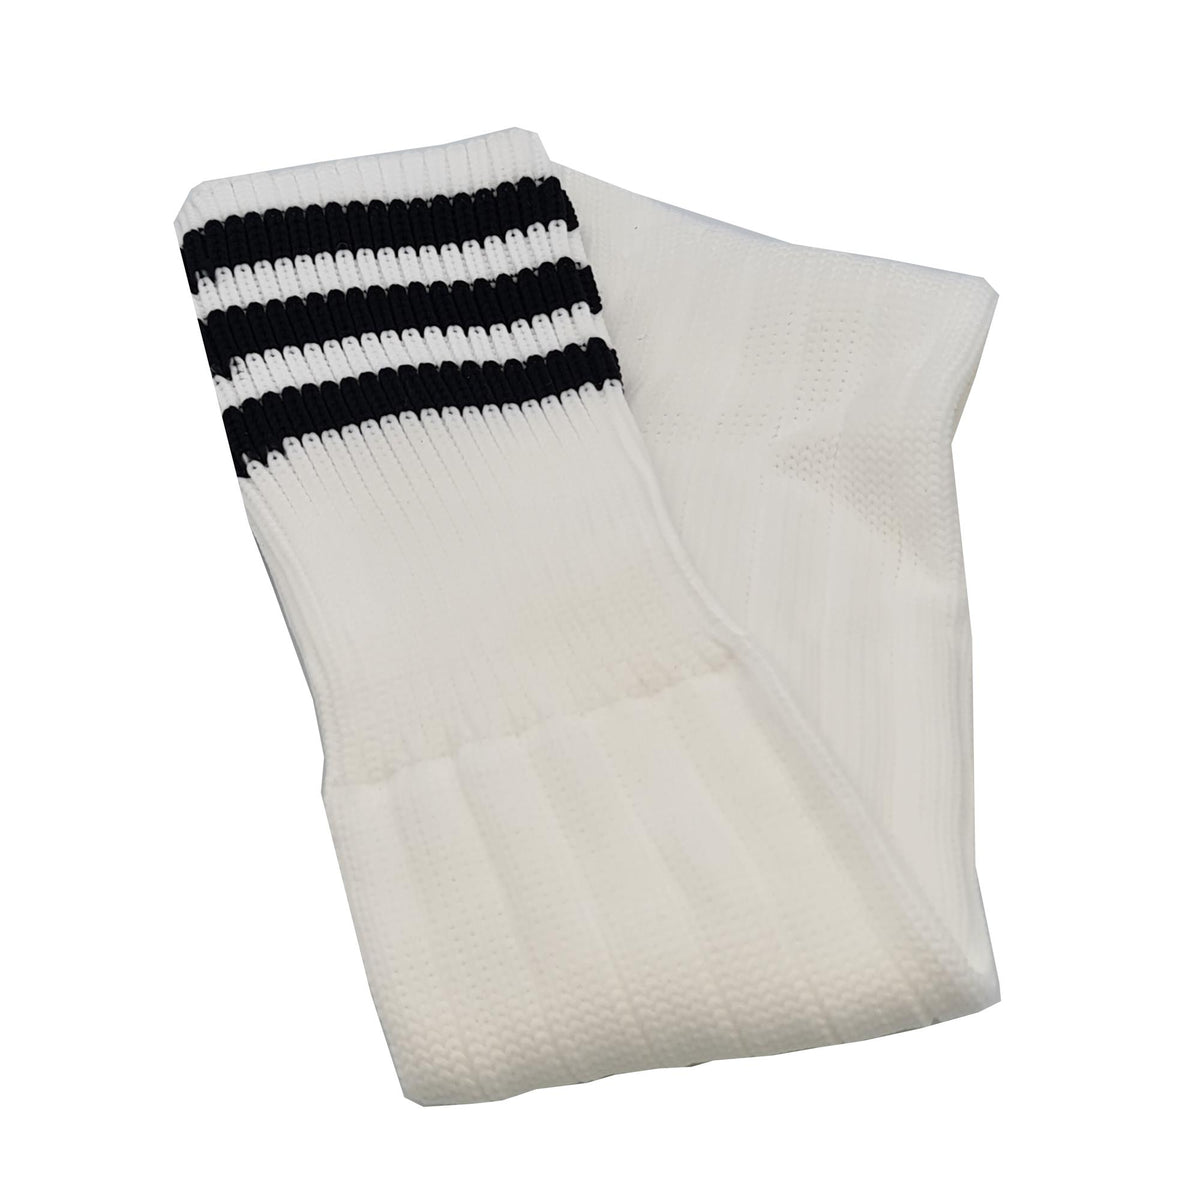 Three Stripes Football Rugby Premium Socks - Made In UK - WHITE/BLACK - MENS ( UK 6-8)